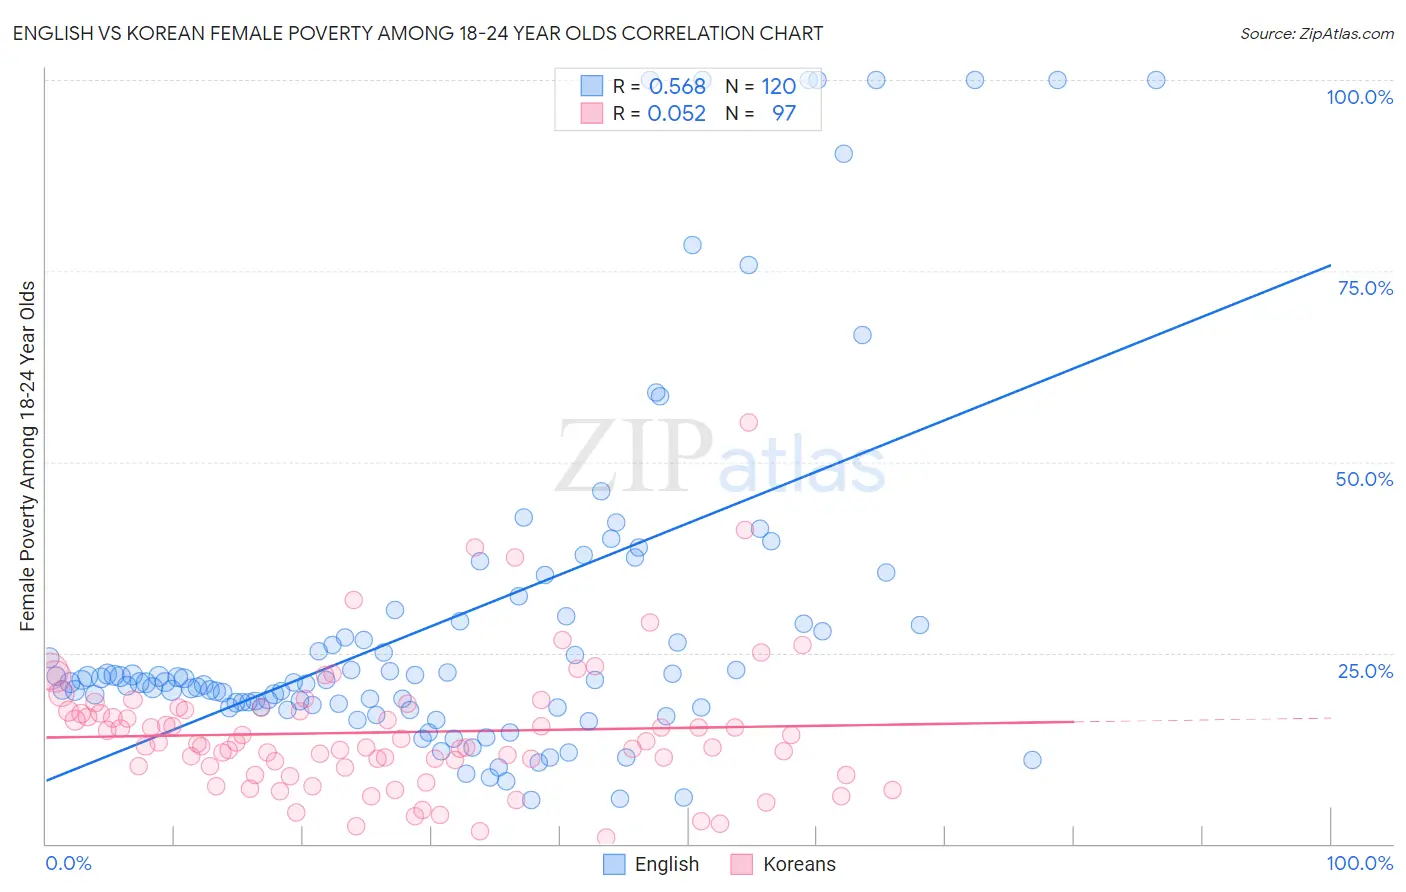 English vs Korean Female Poverty Among 18-24 Year Olds